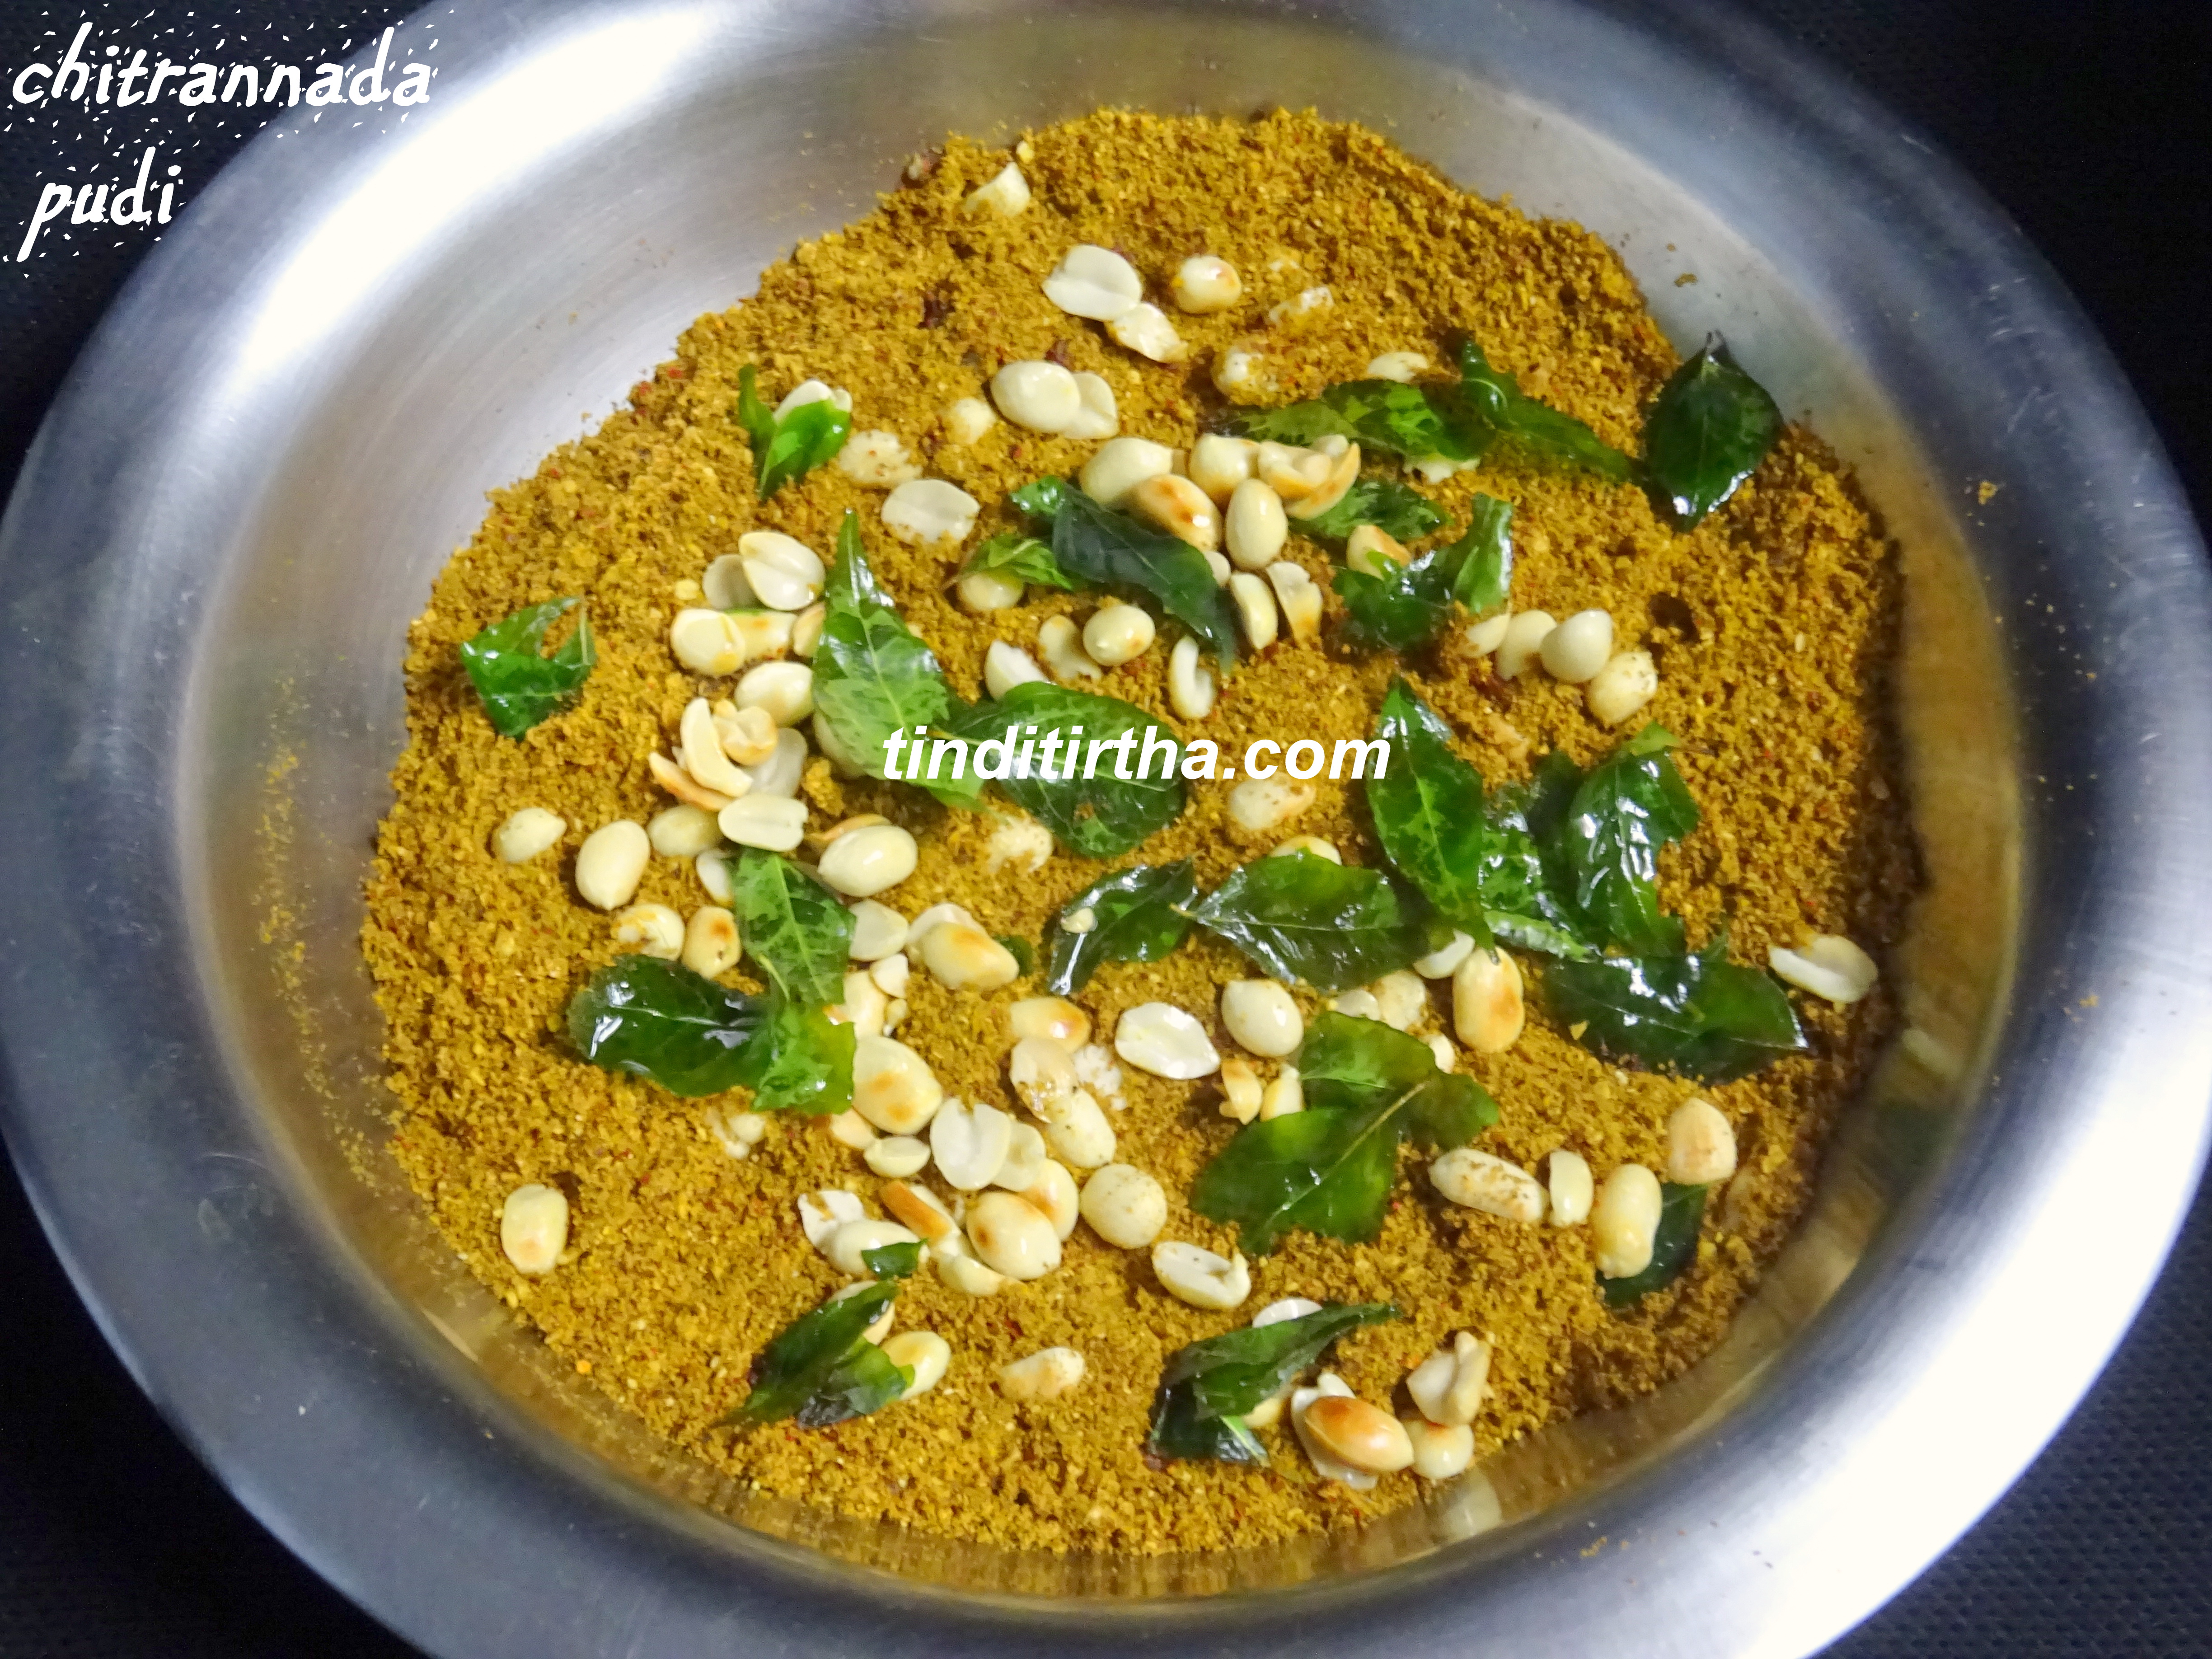 Chitrannada Pudi | Spice powder for tempered spicy rice dish